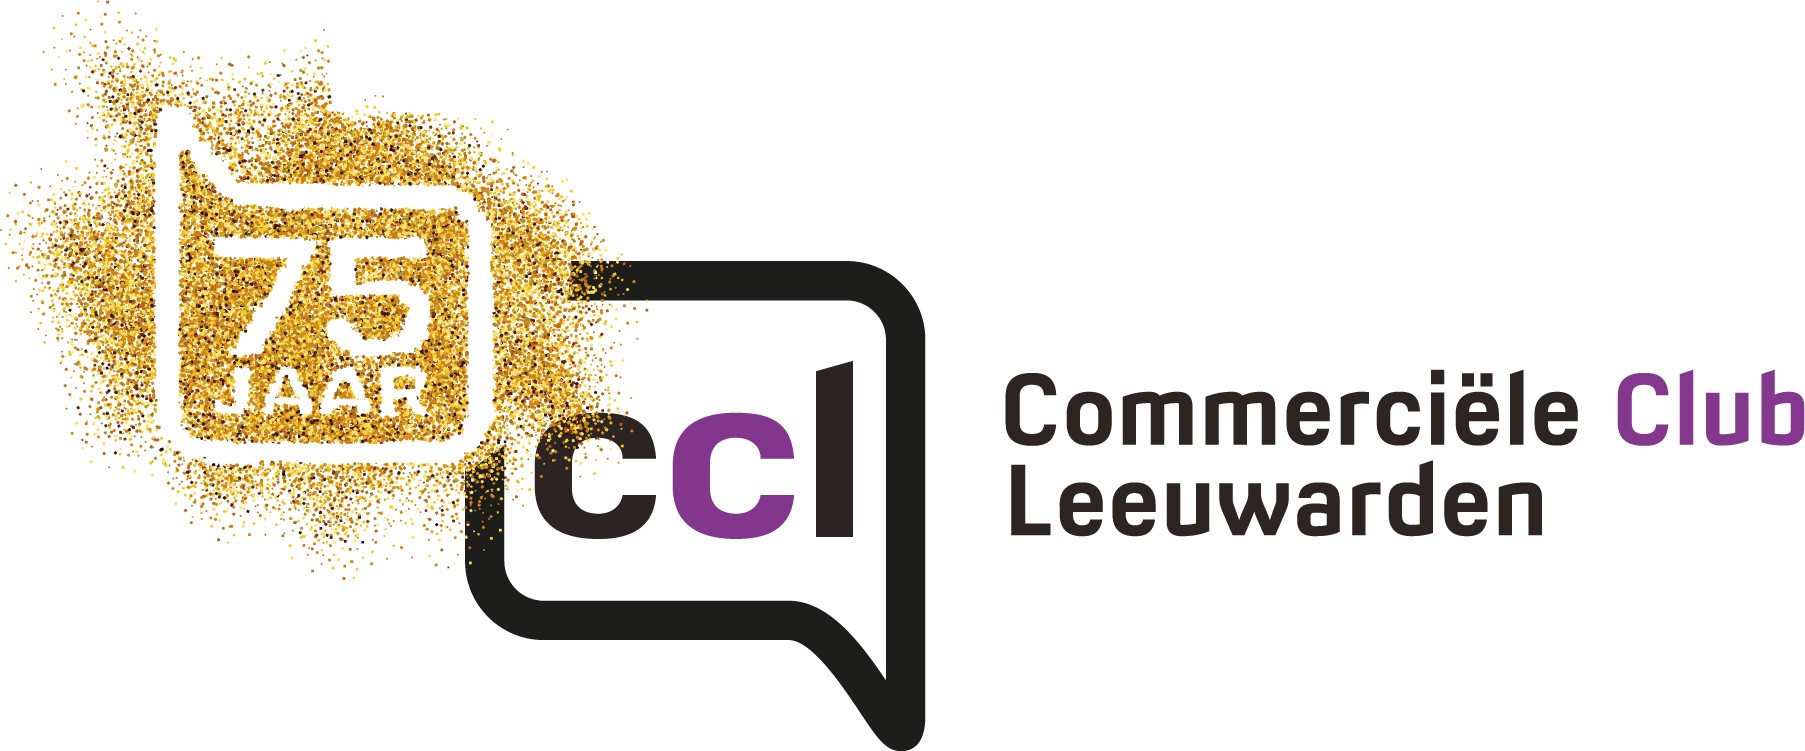 Commerciële Club Leeuwarden logo